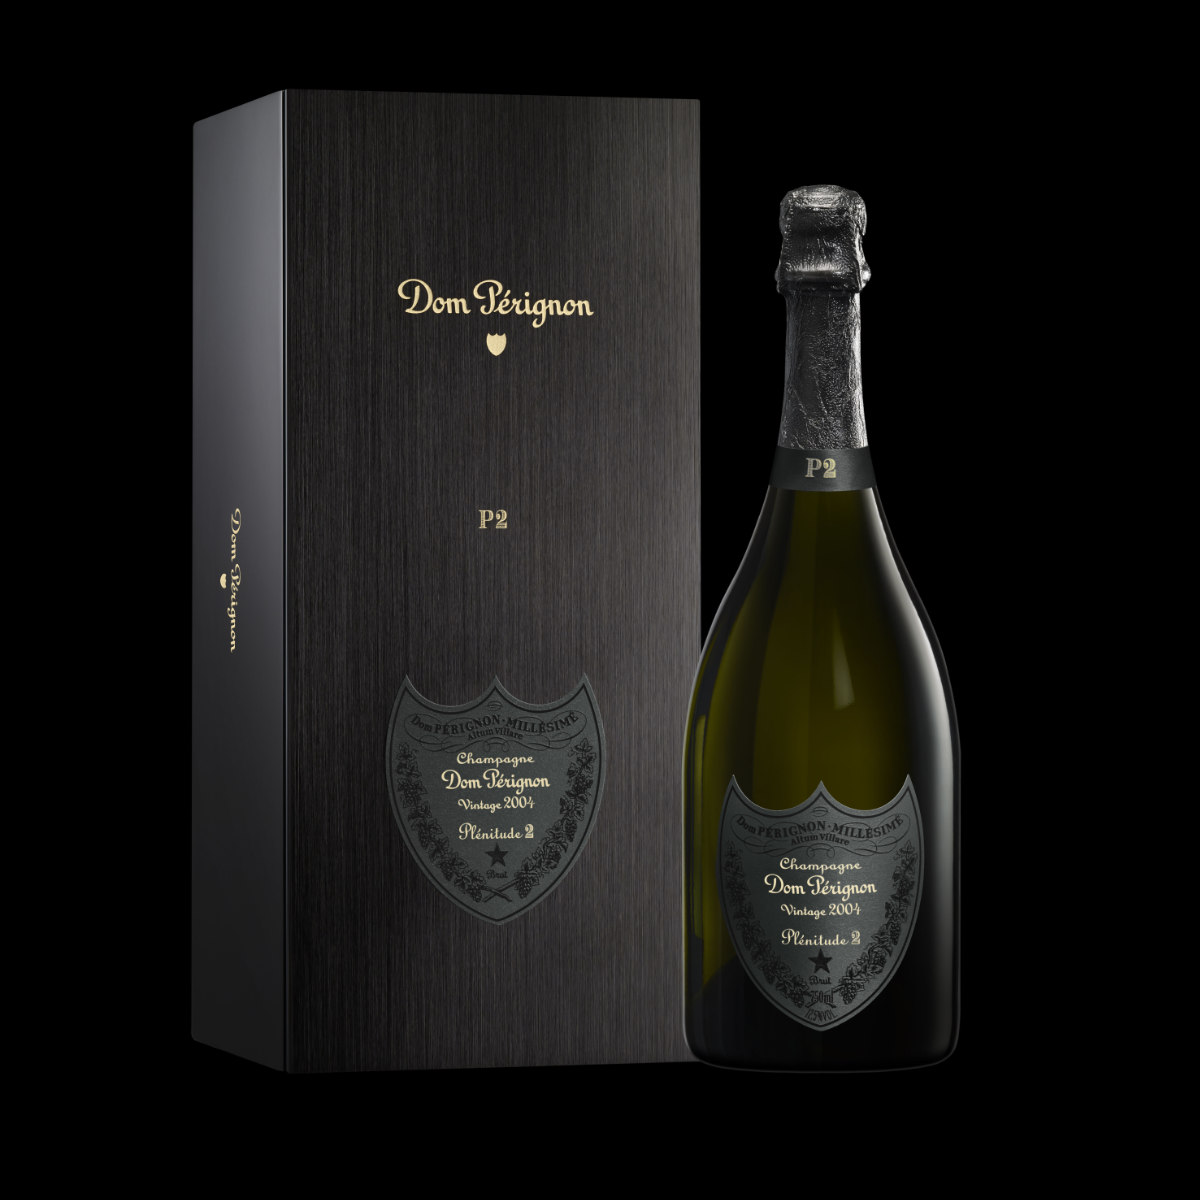 Plénitude 2: The Second Life Of Dom Pérignon